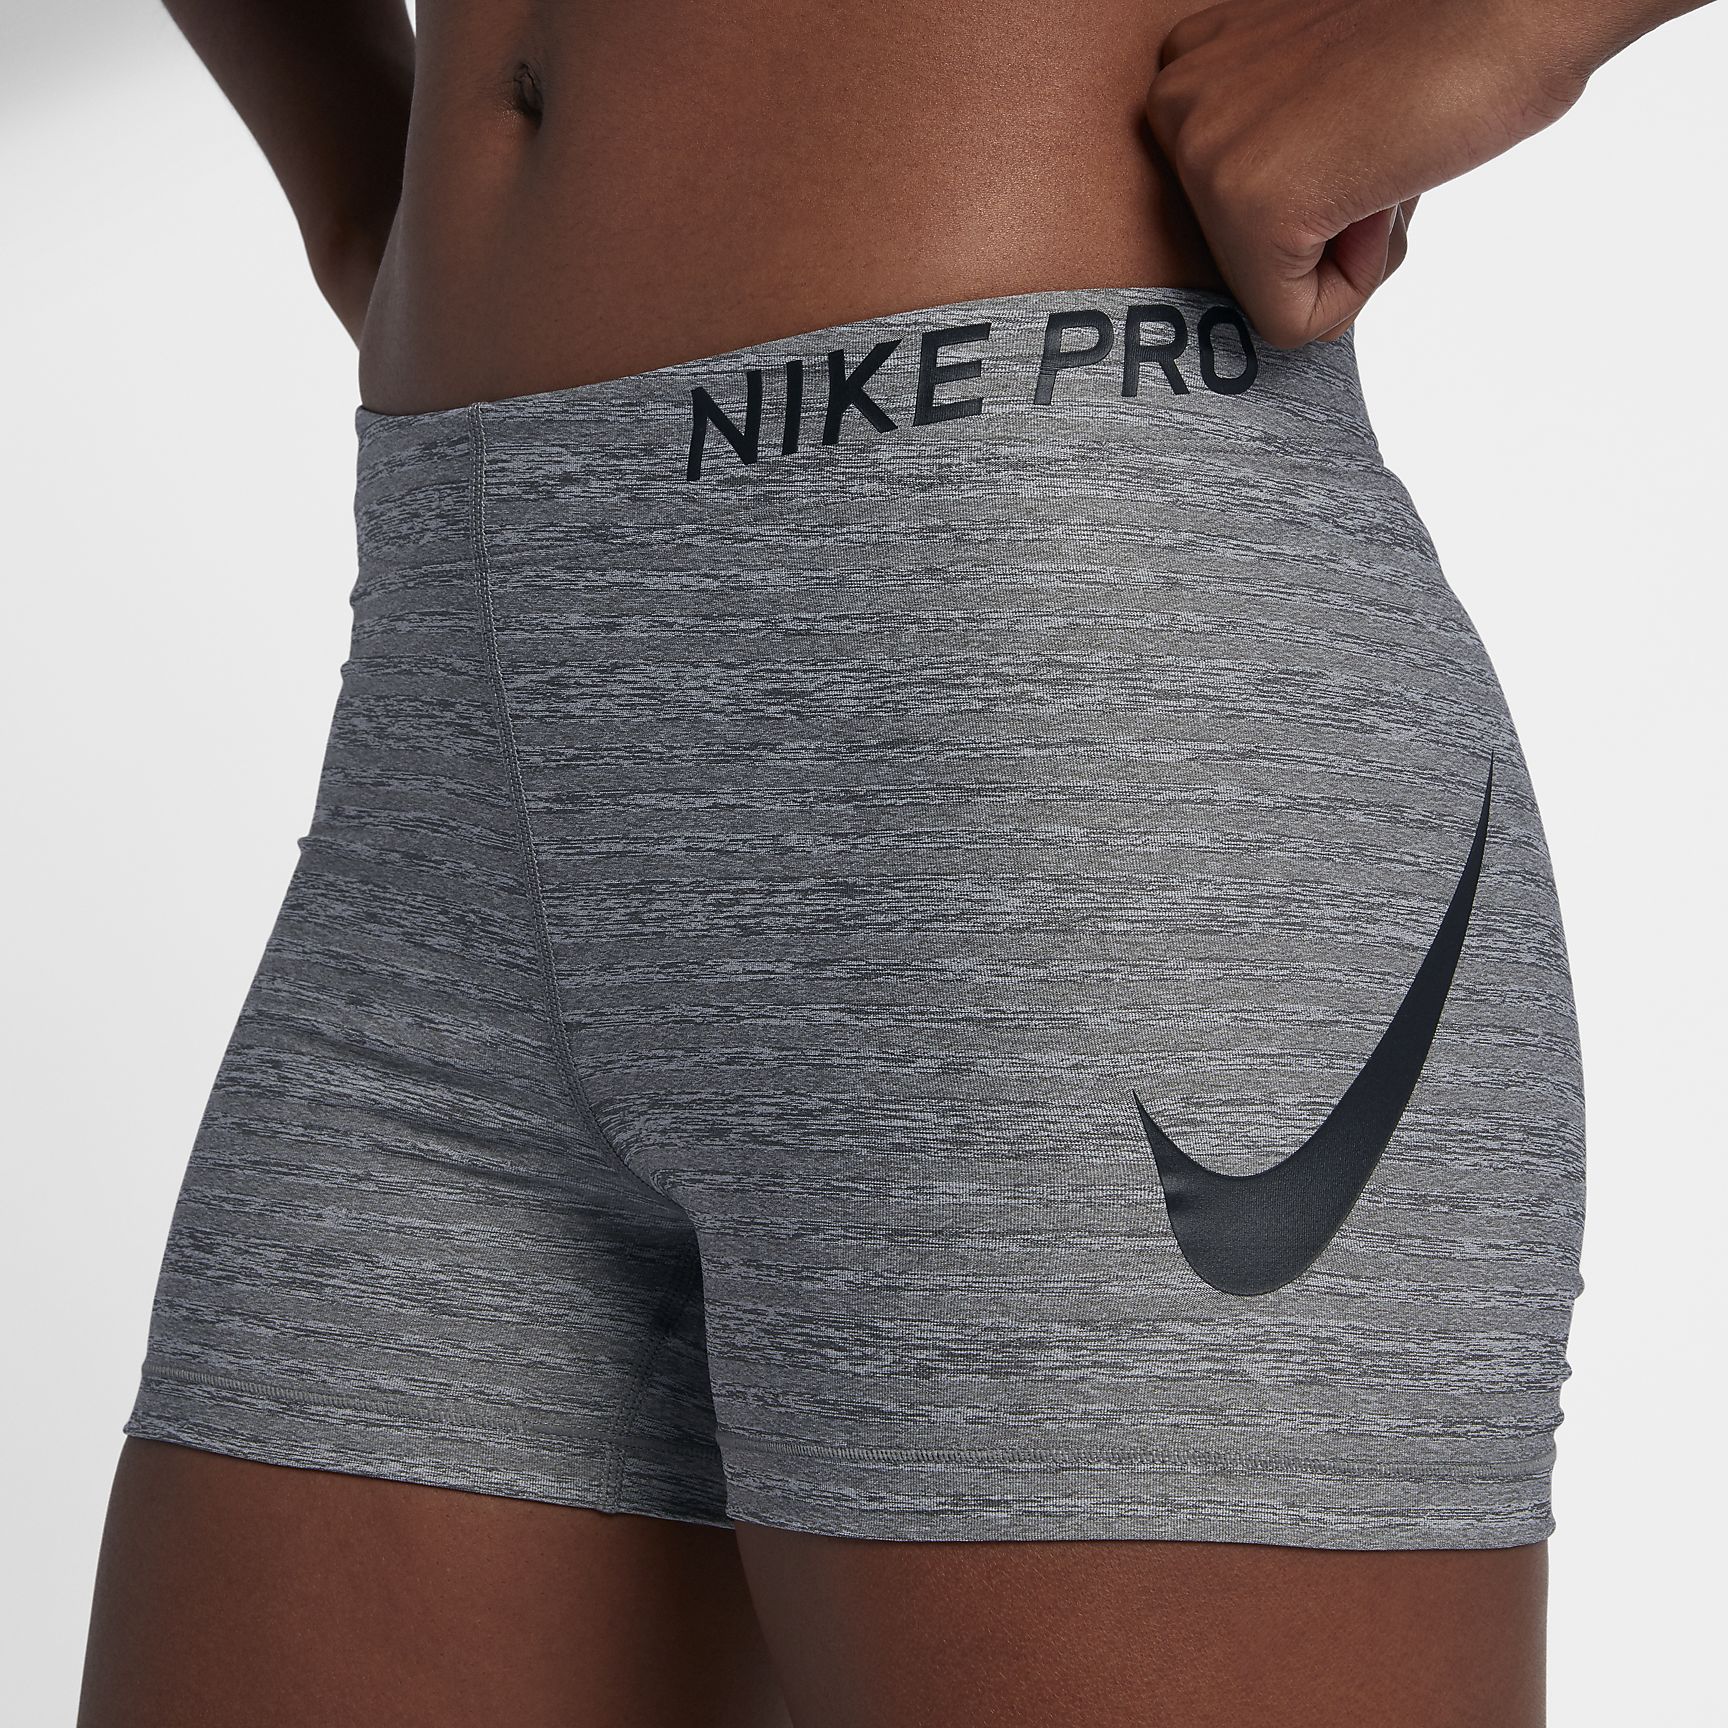 Nike Pro | Gym shorts womens, Clothes, Nike pro women